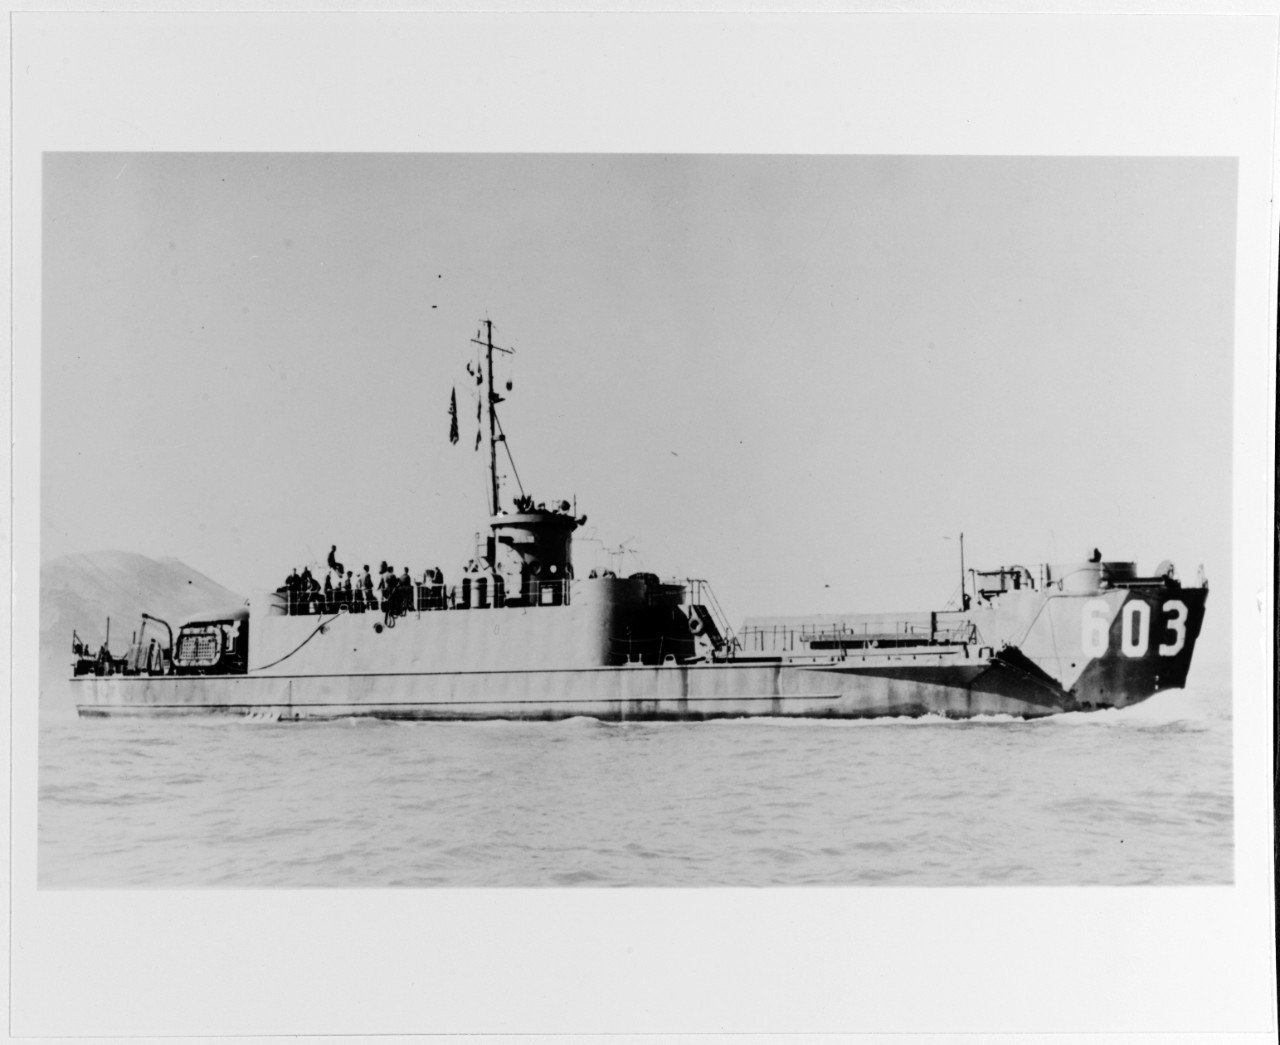 USS LCI-603